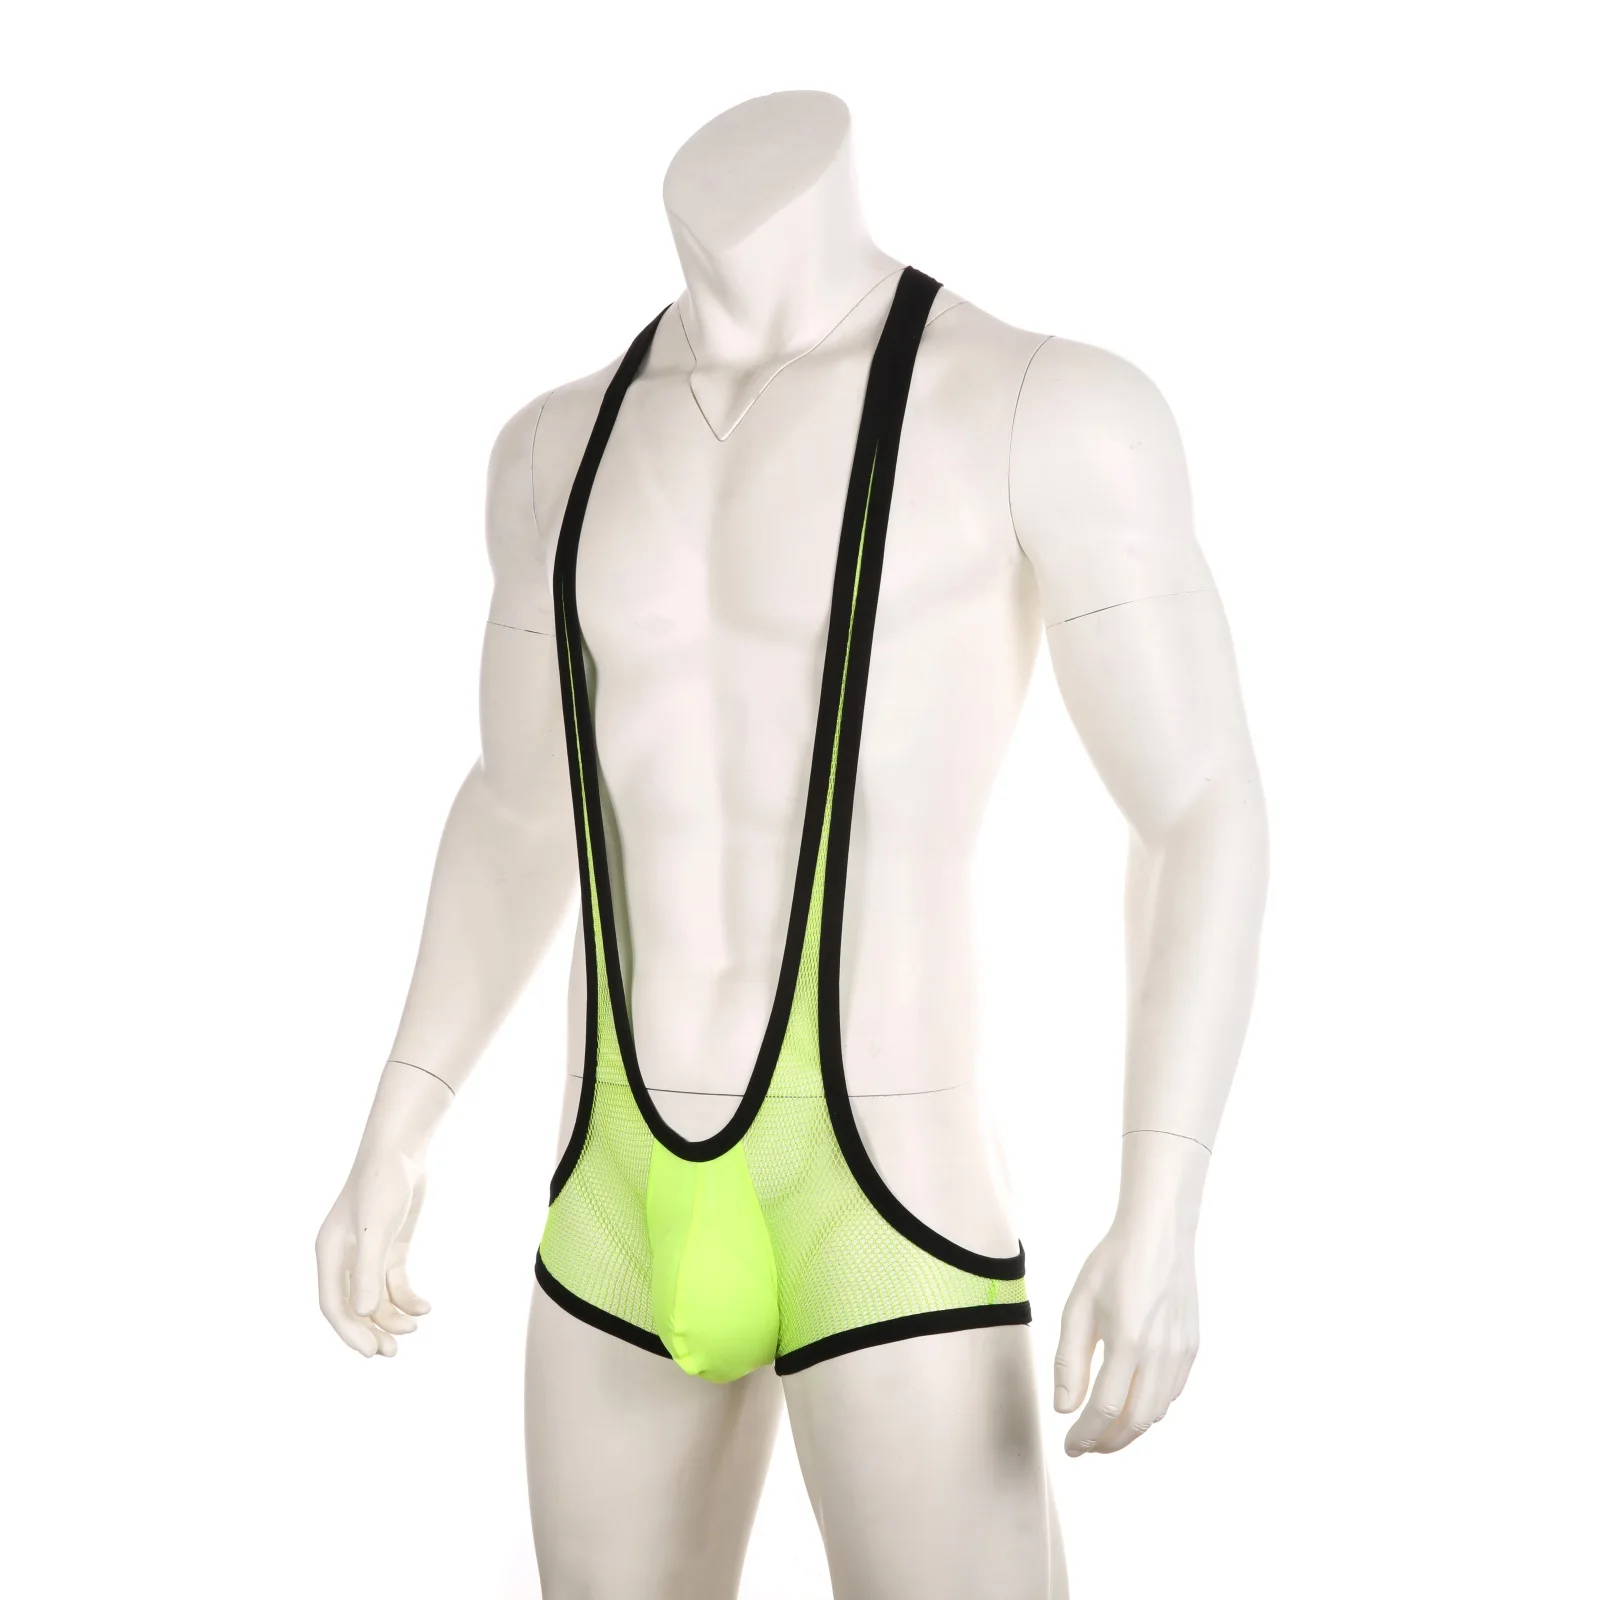 Men's Leotard Harness Tank Top Mankini Underwear Thong See-Thru Neon Green Large